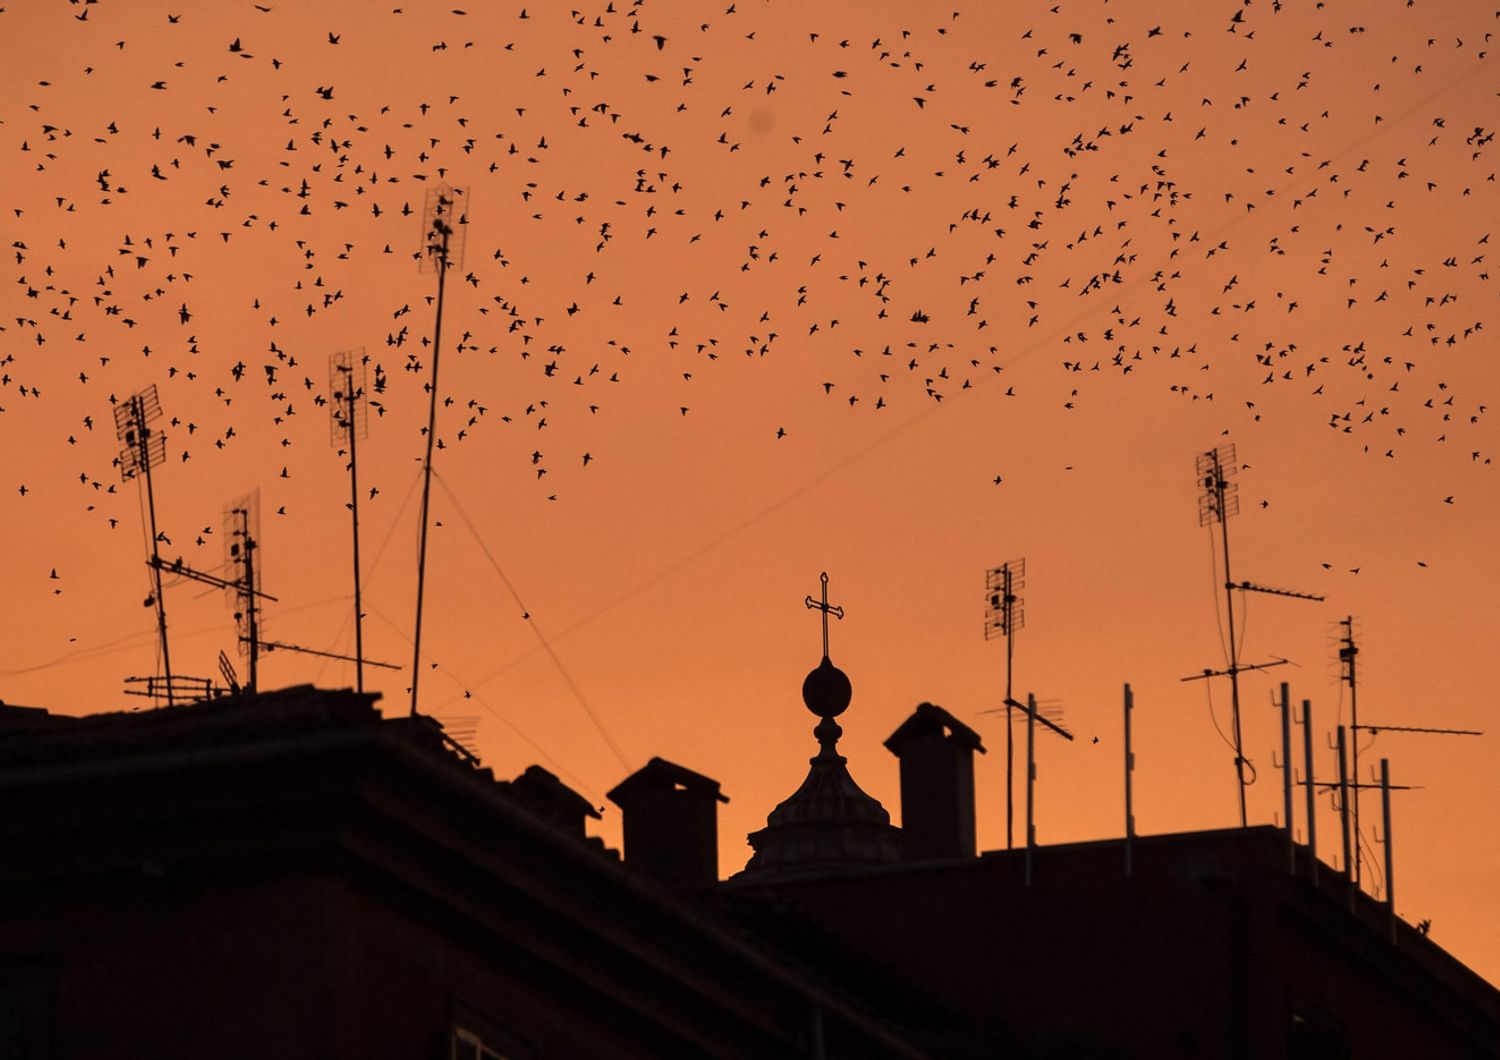 Roma, stormi di uccelli sui tetti (Agf)&nbsp;